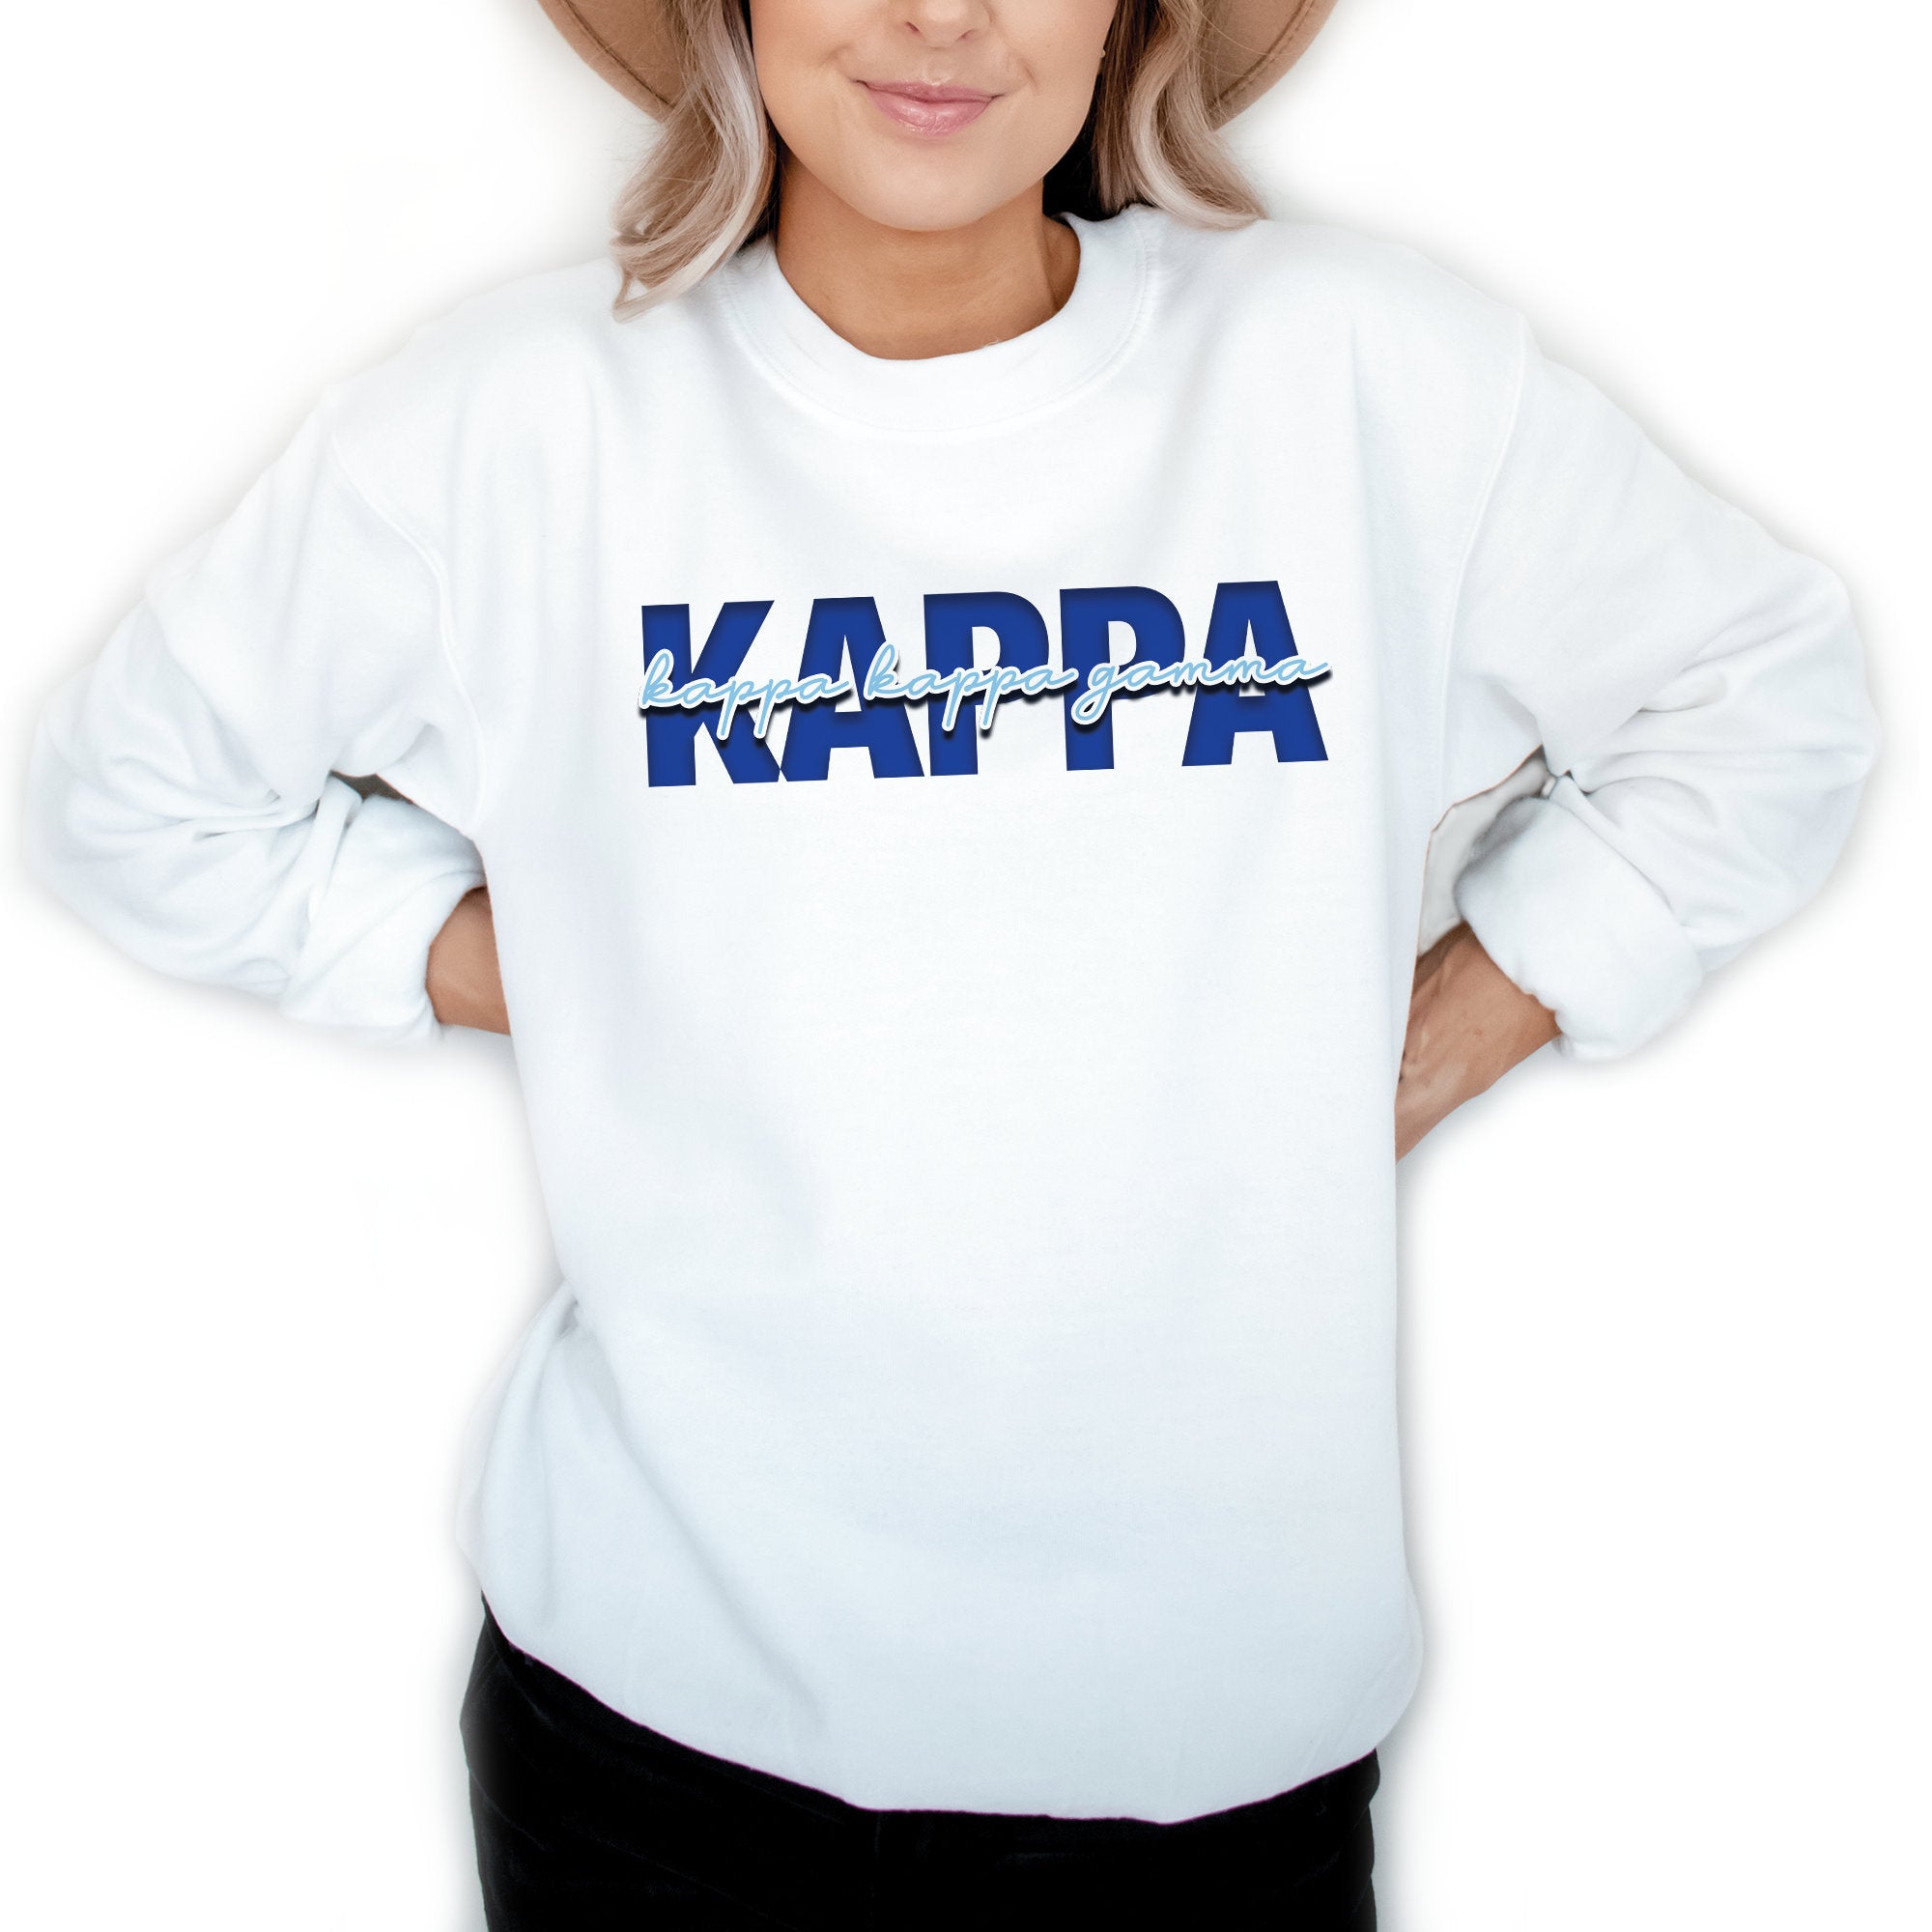 Kappa Kappa Gamma Signature Sweatshirt - Go Greek Chic